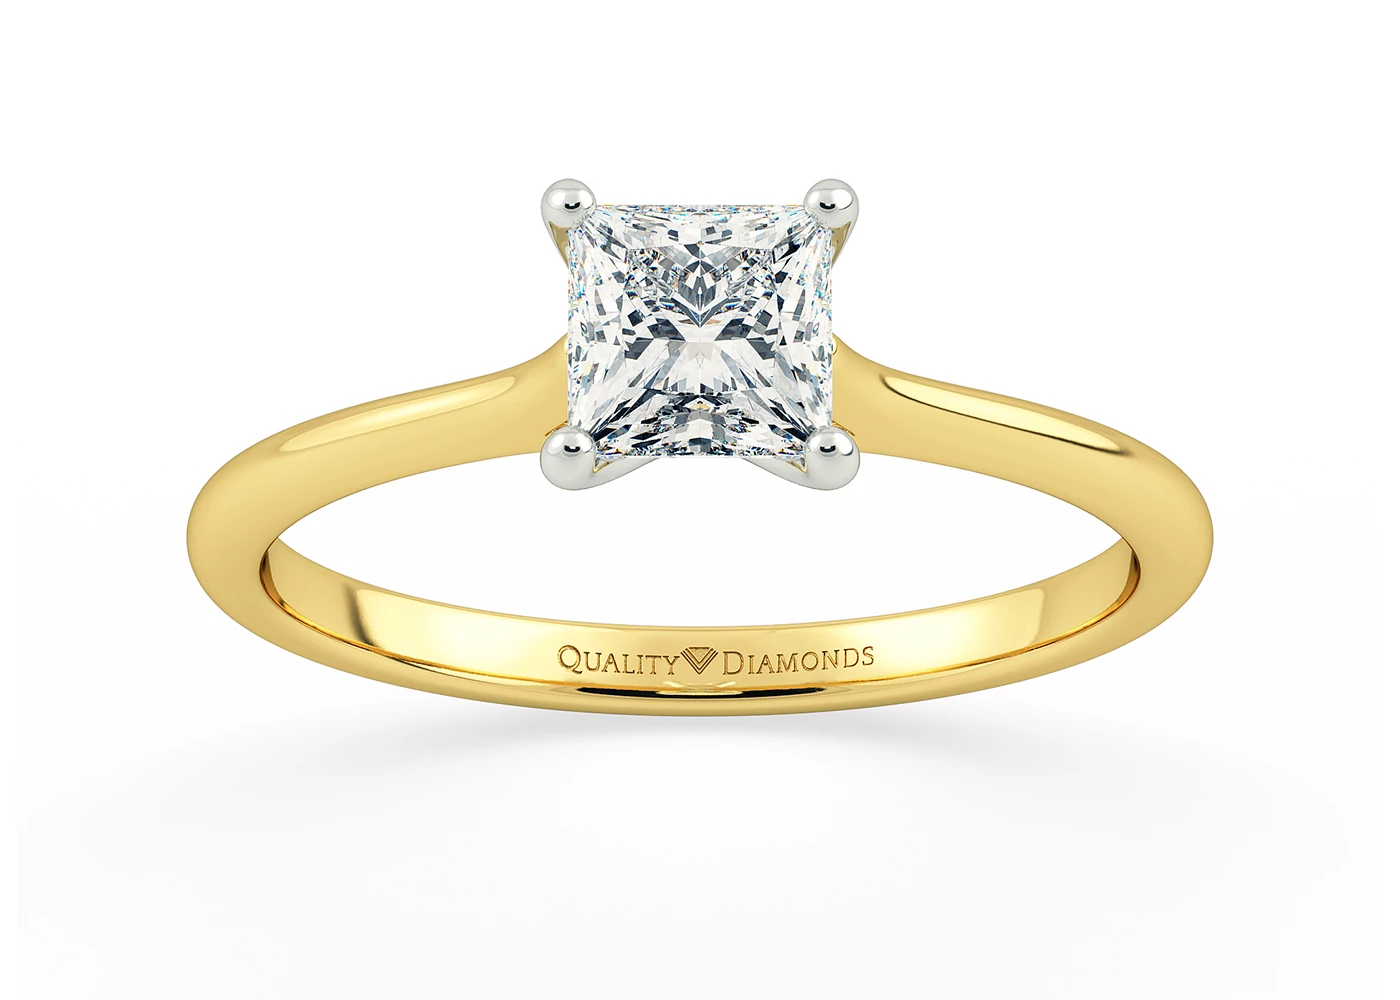 Princess Adamas Diamond Ring in 9K Yellow Gold